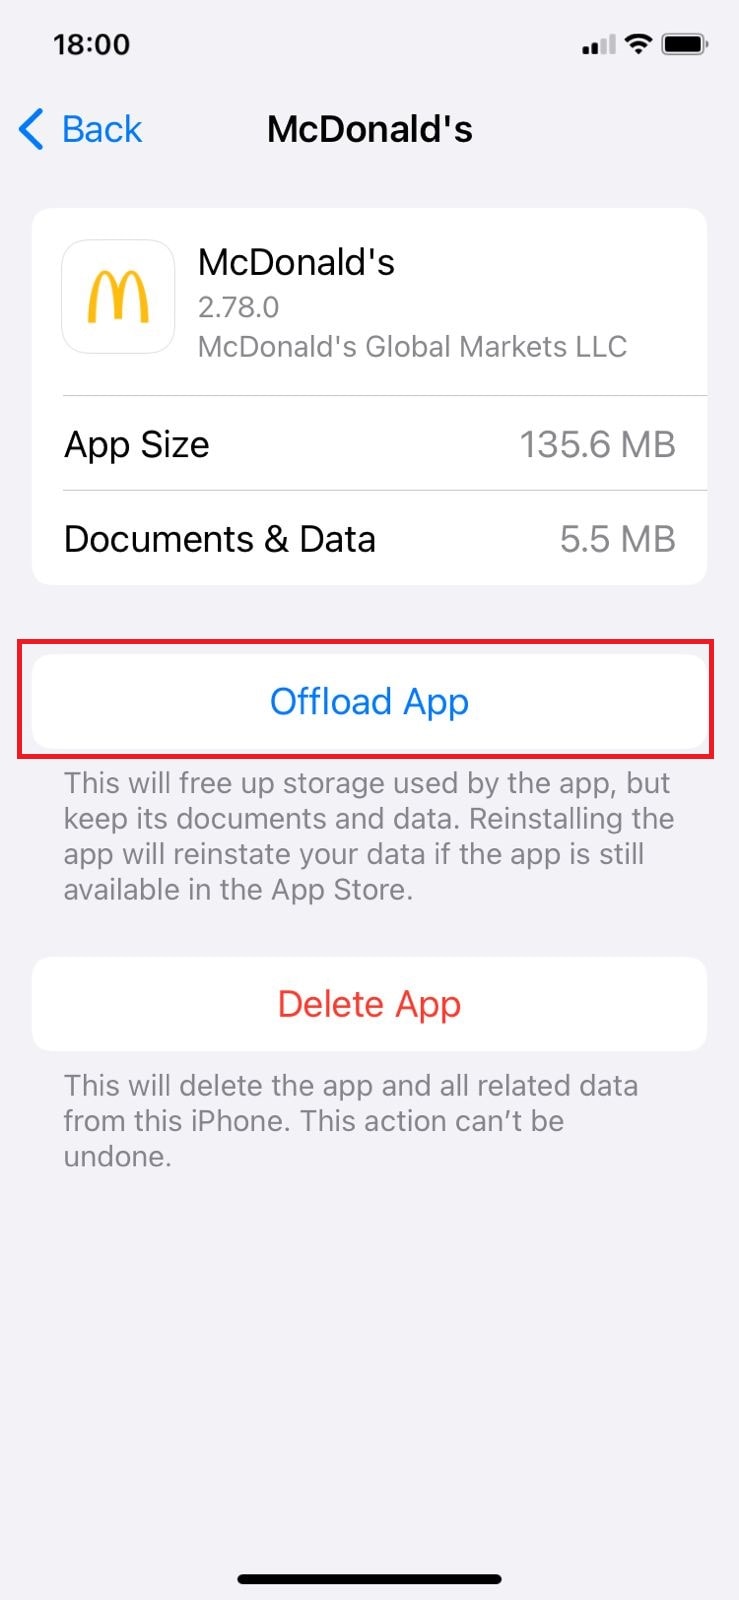 tap on Offload App